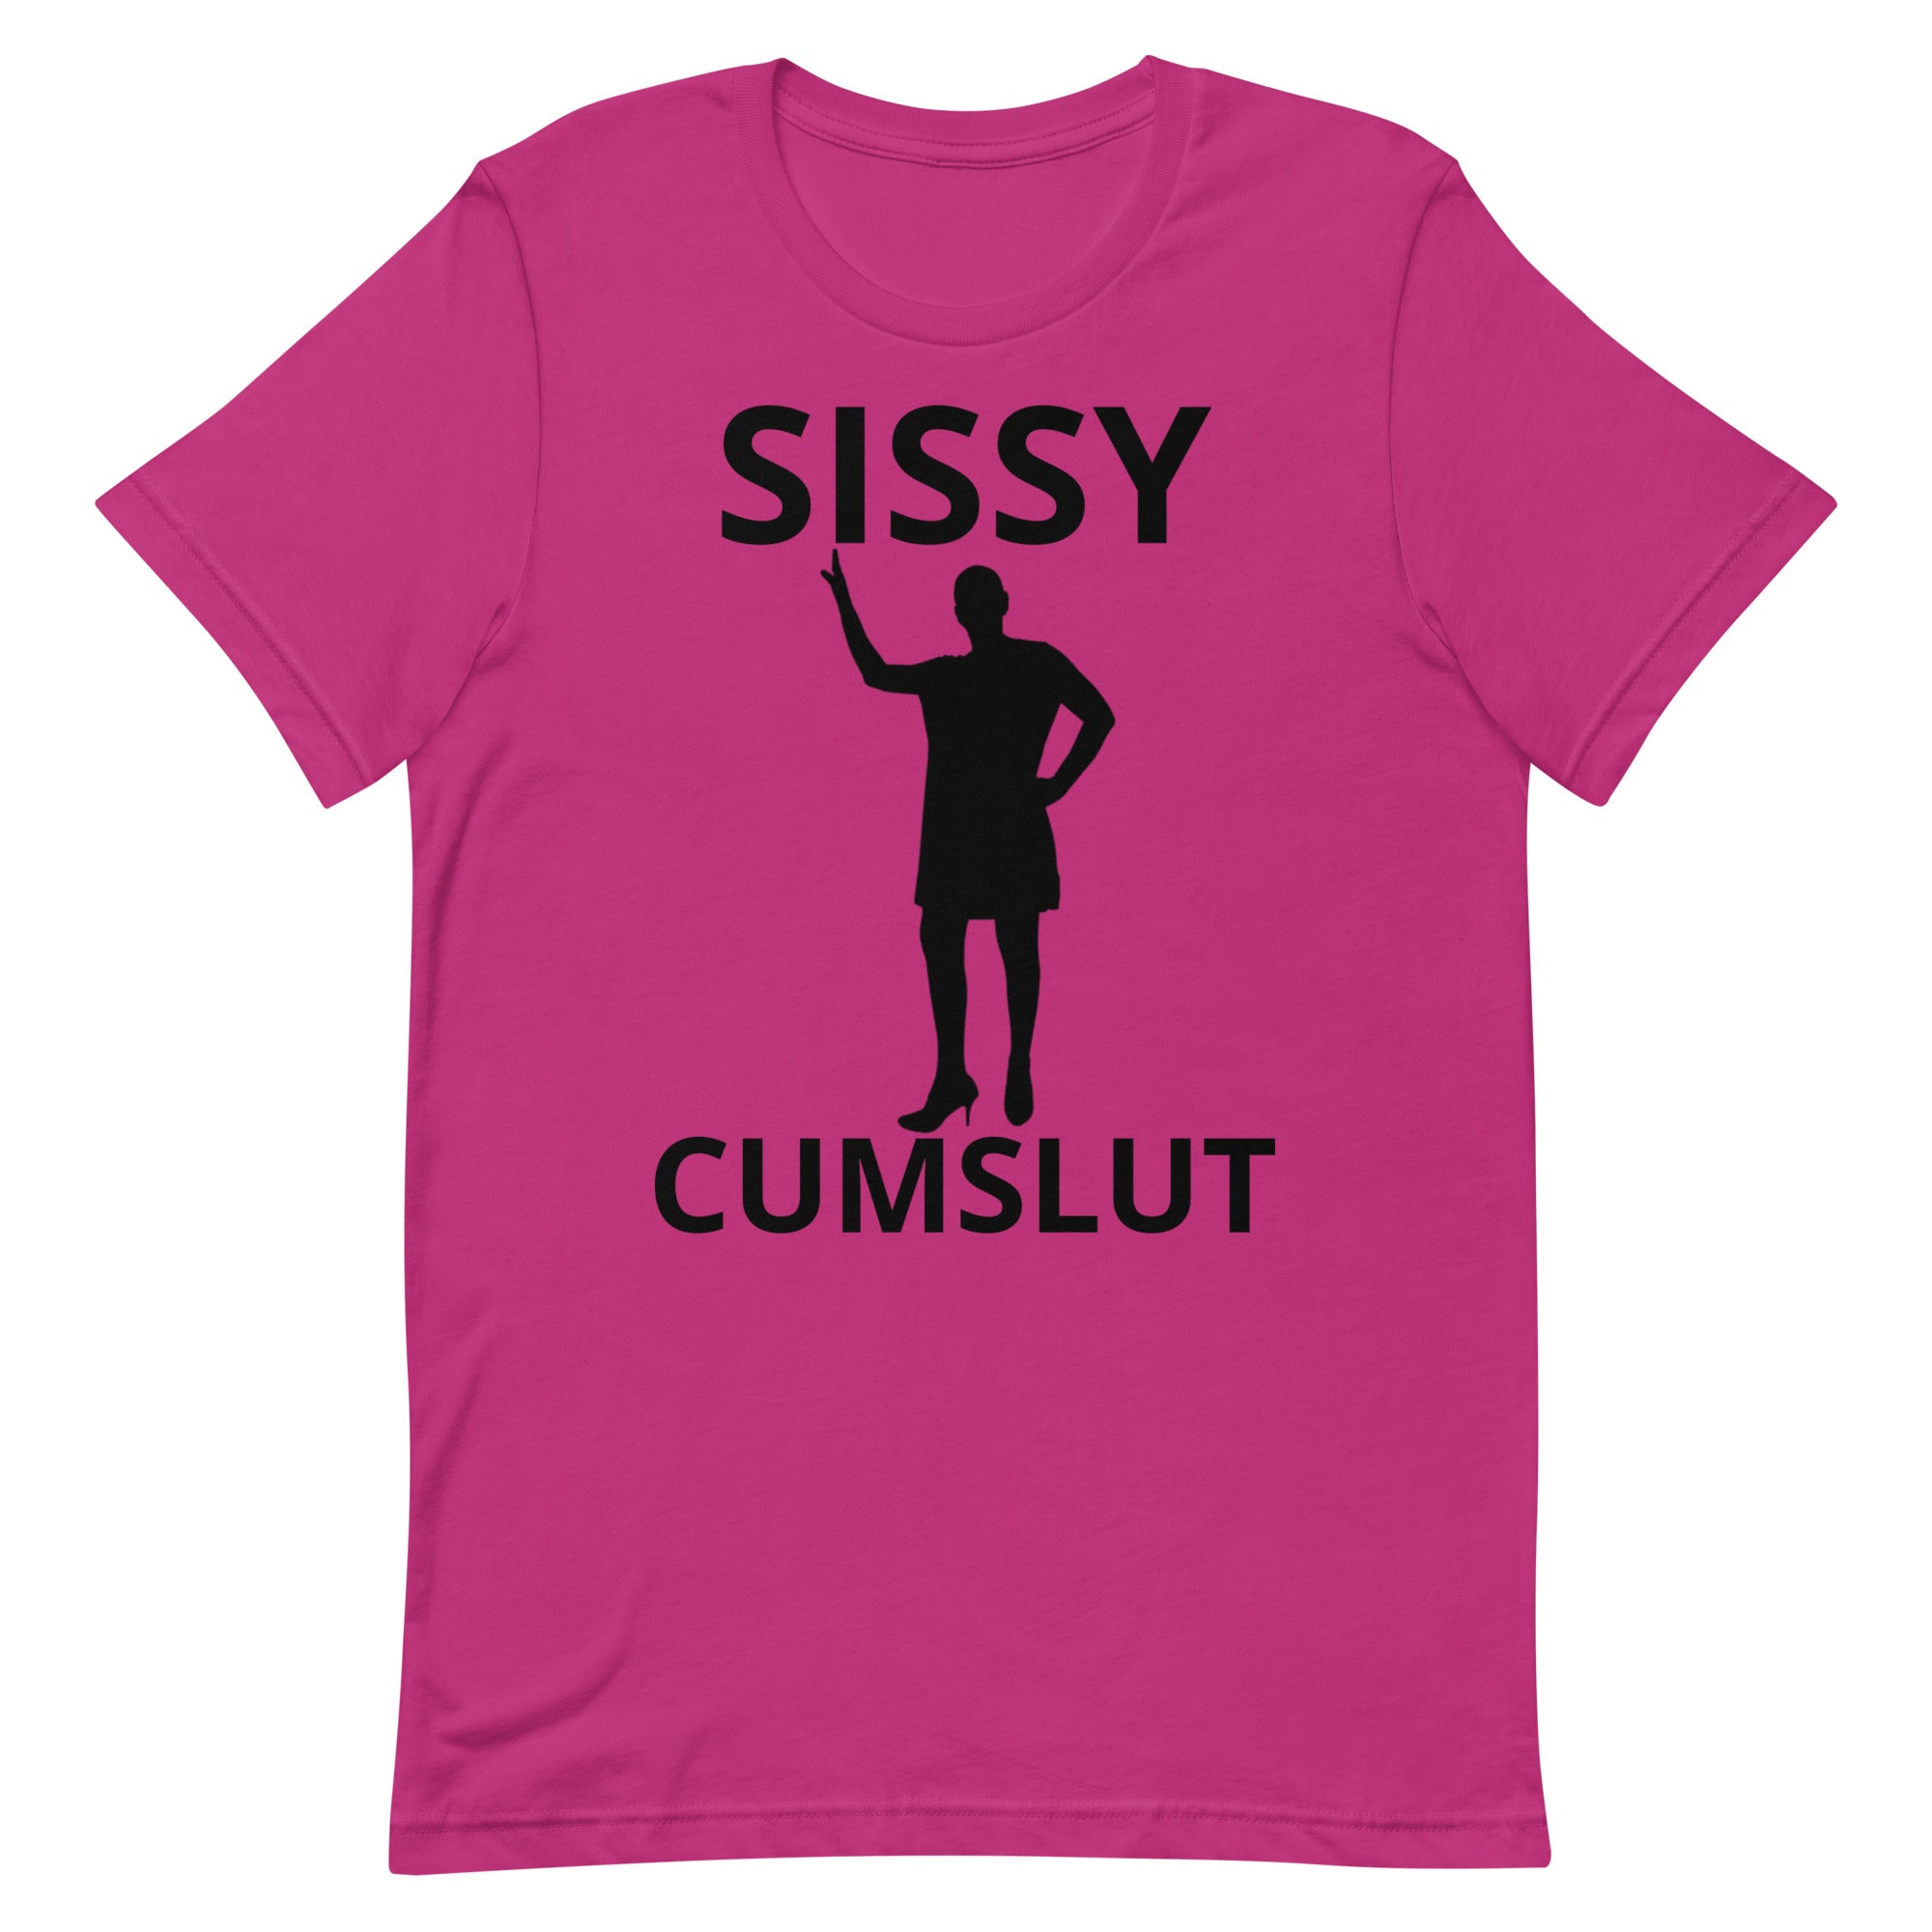 "Sissy Cumslut" Short-Sleeve t-shirt